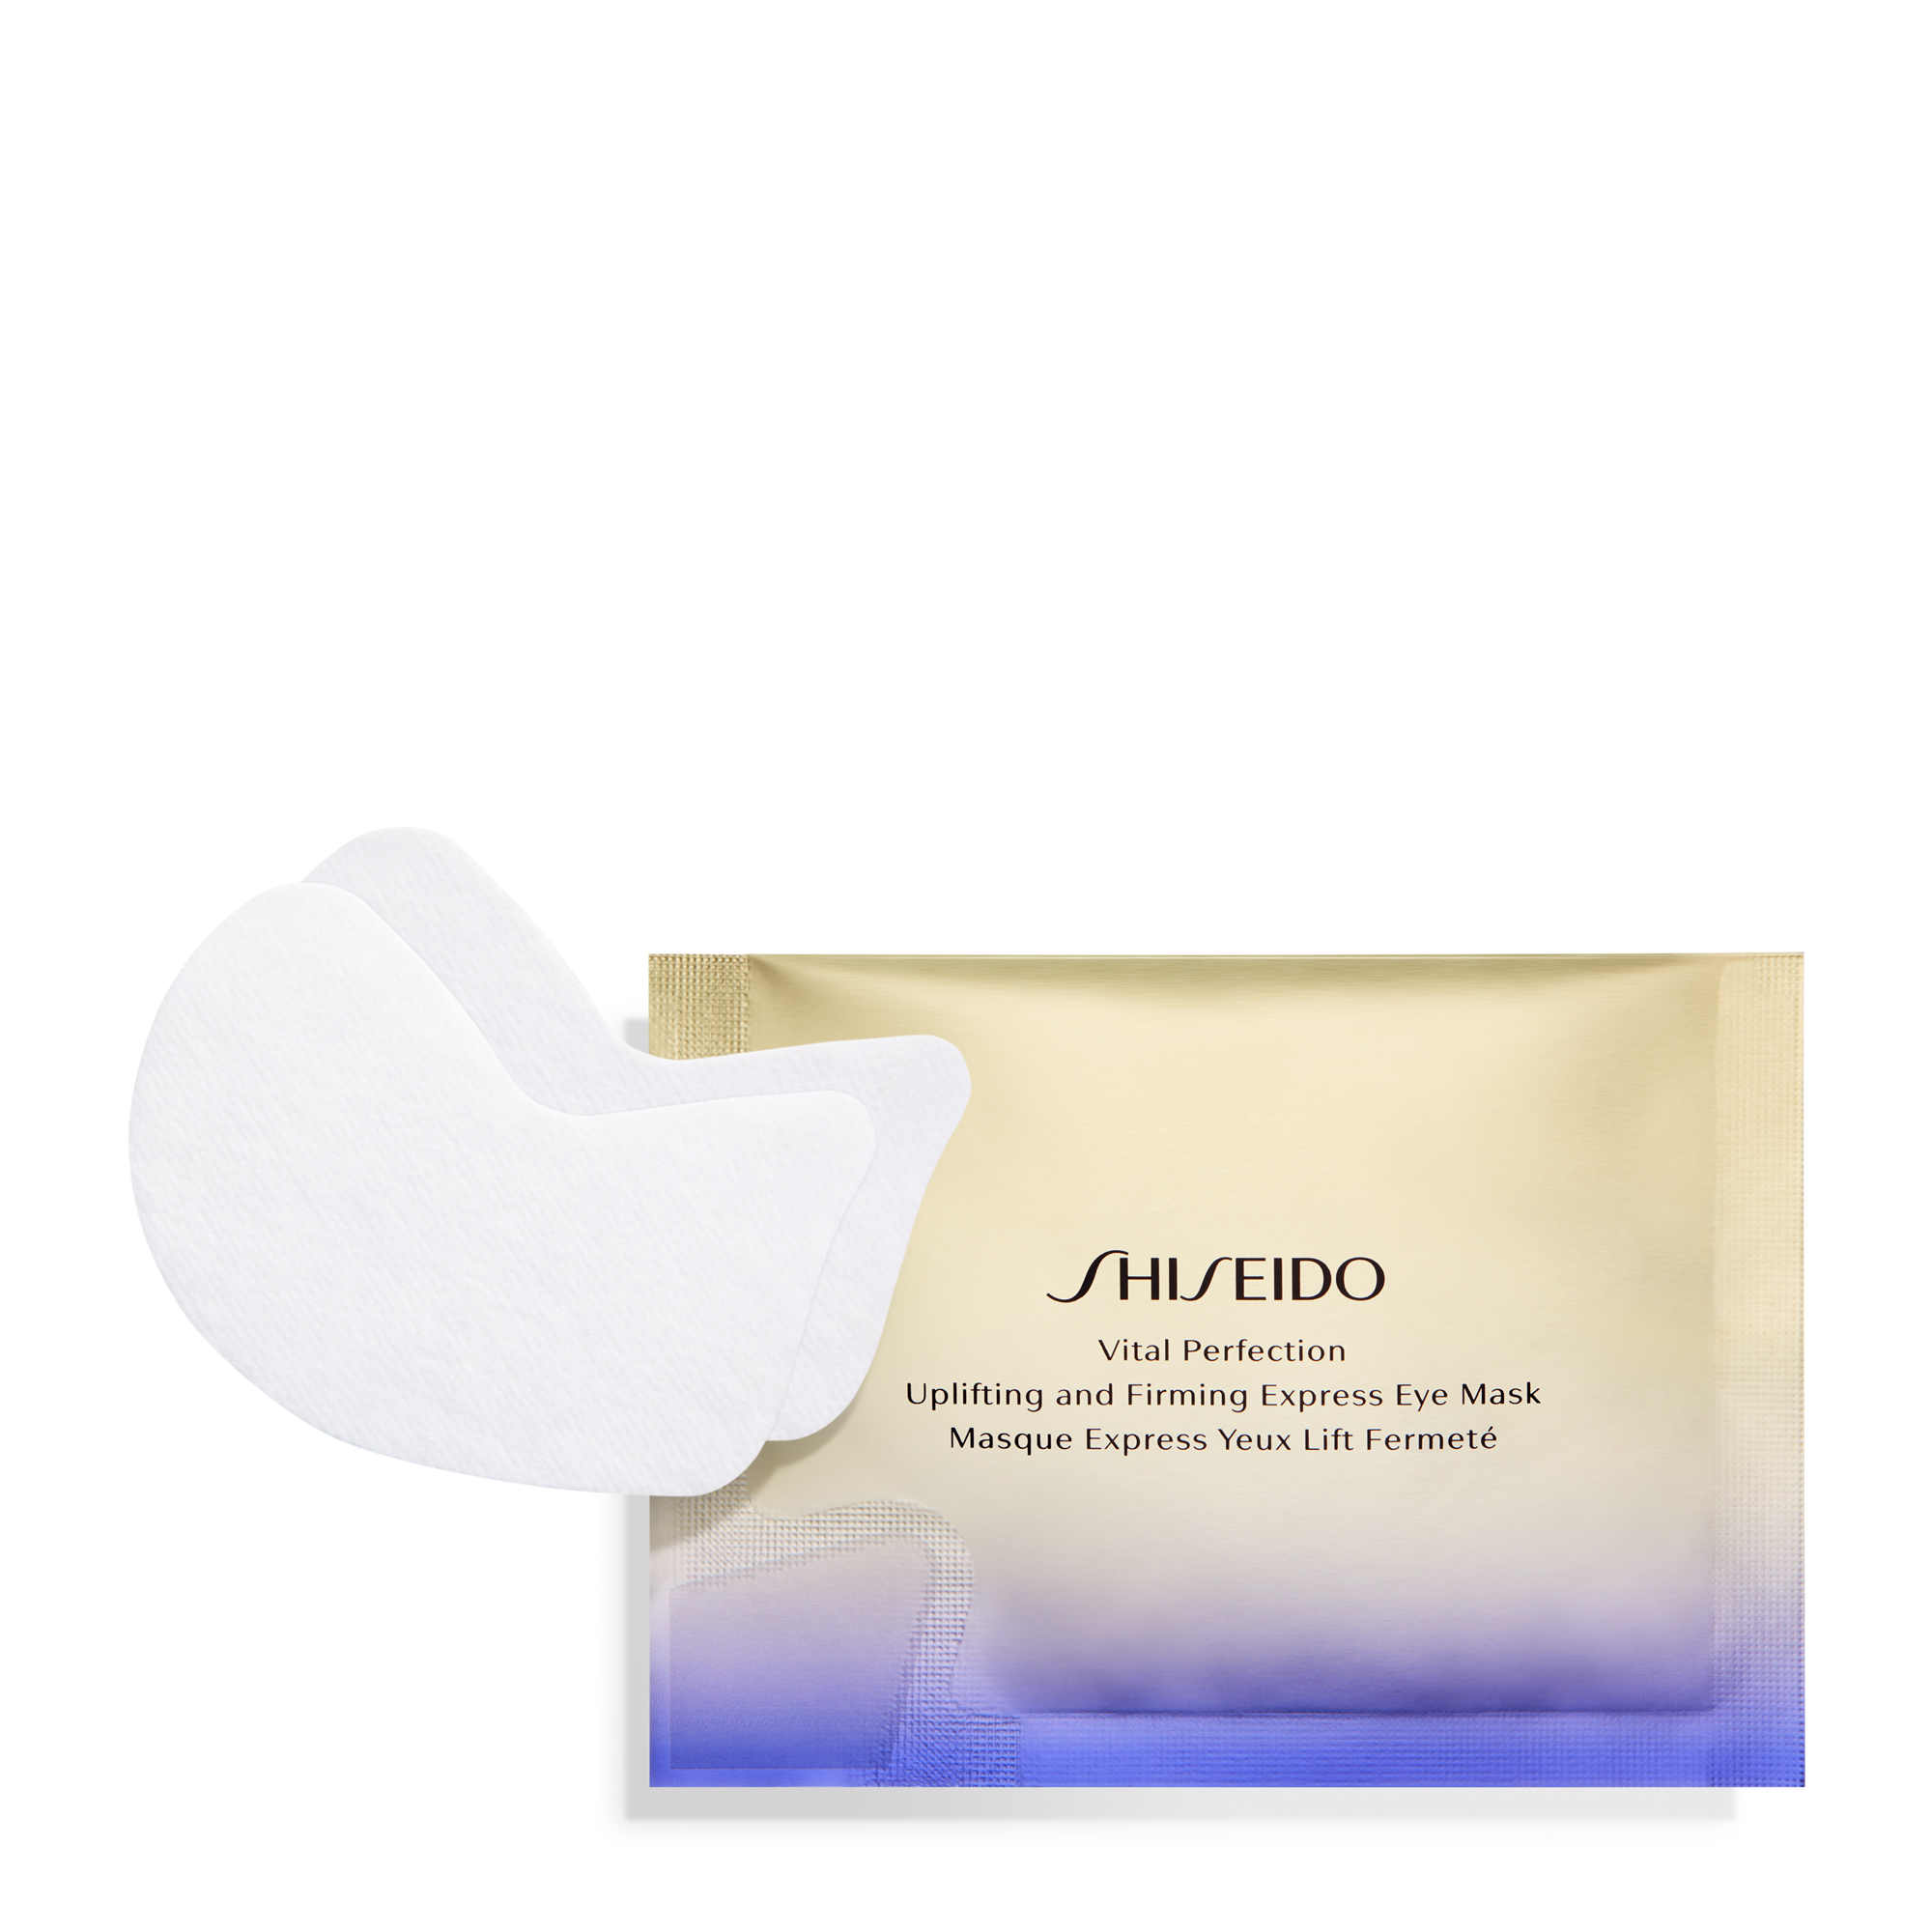 Shiseido Vital Perfection Uplifting and Firming Express Eye Mask - 2 Sheets  (12 Packettes)